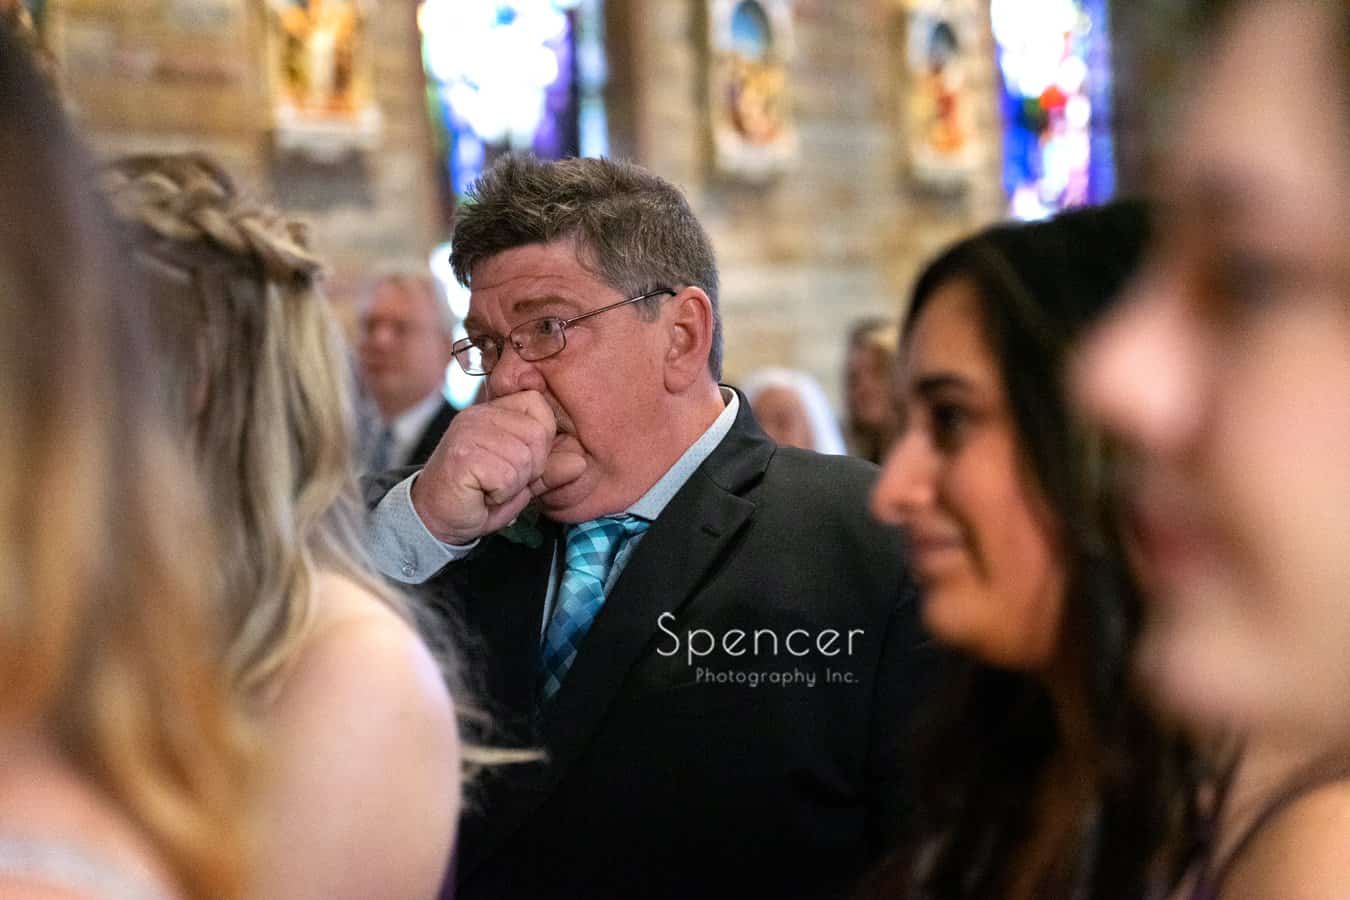 dad choking up at Indiana wedding ceremony